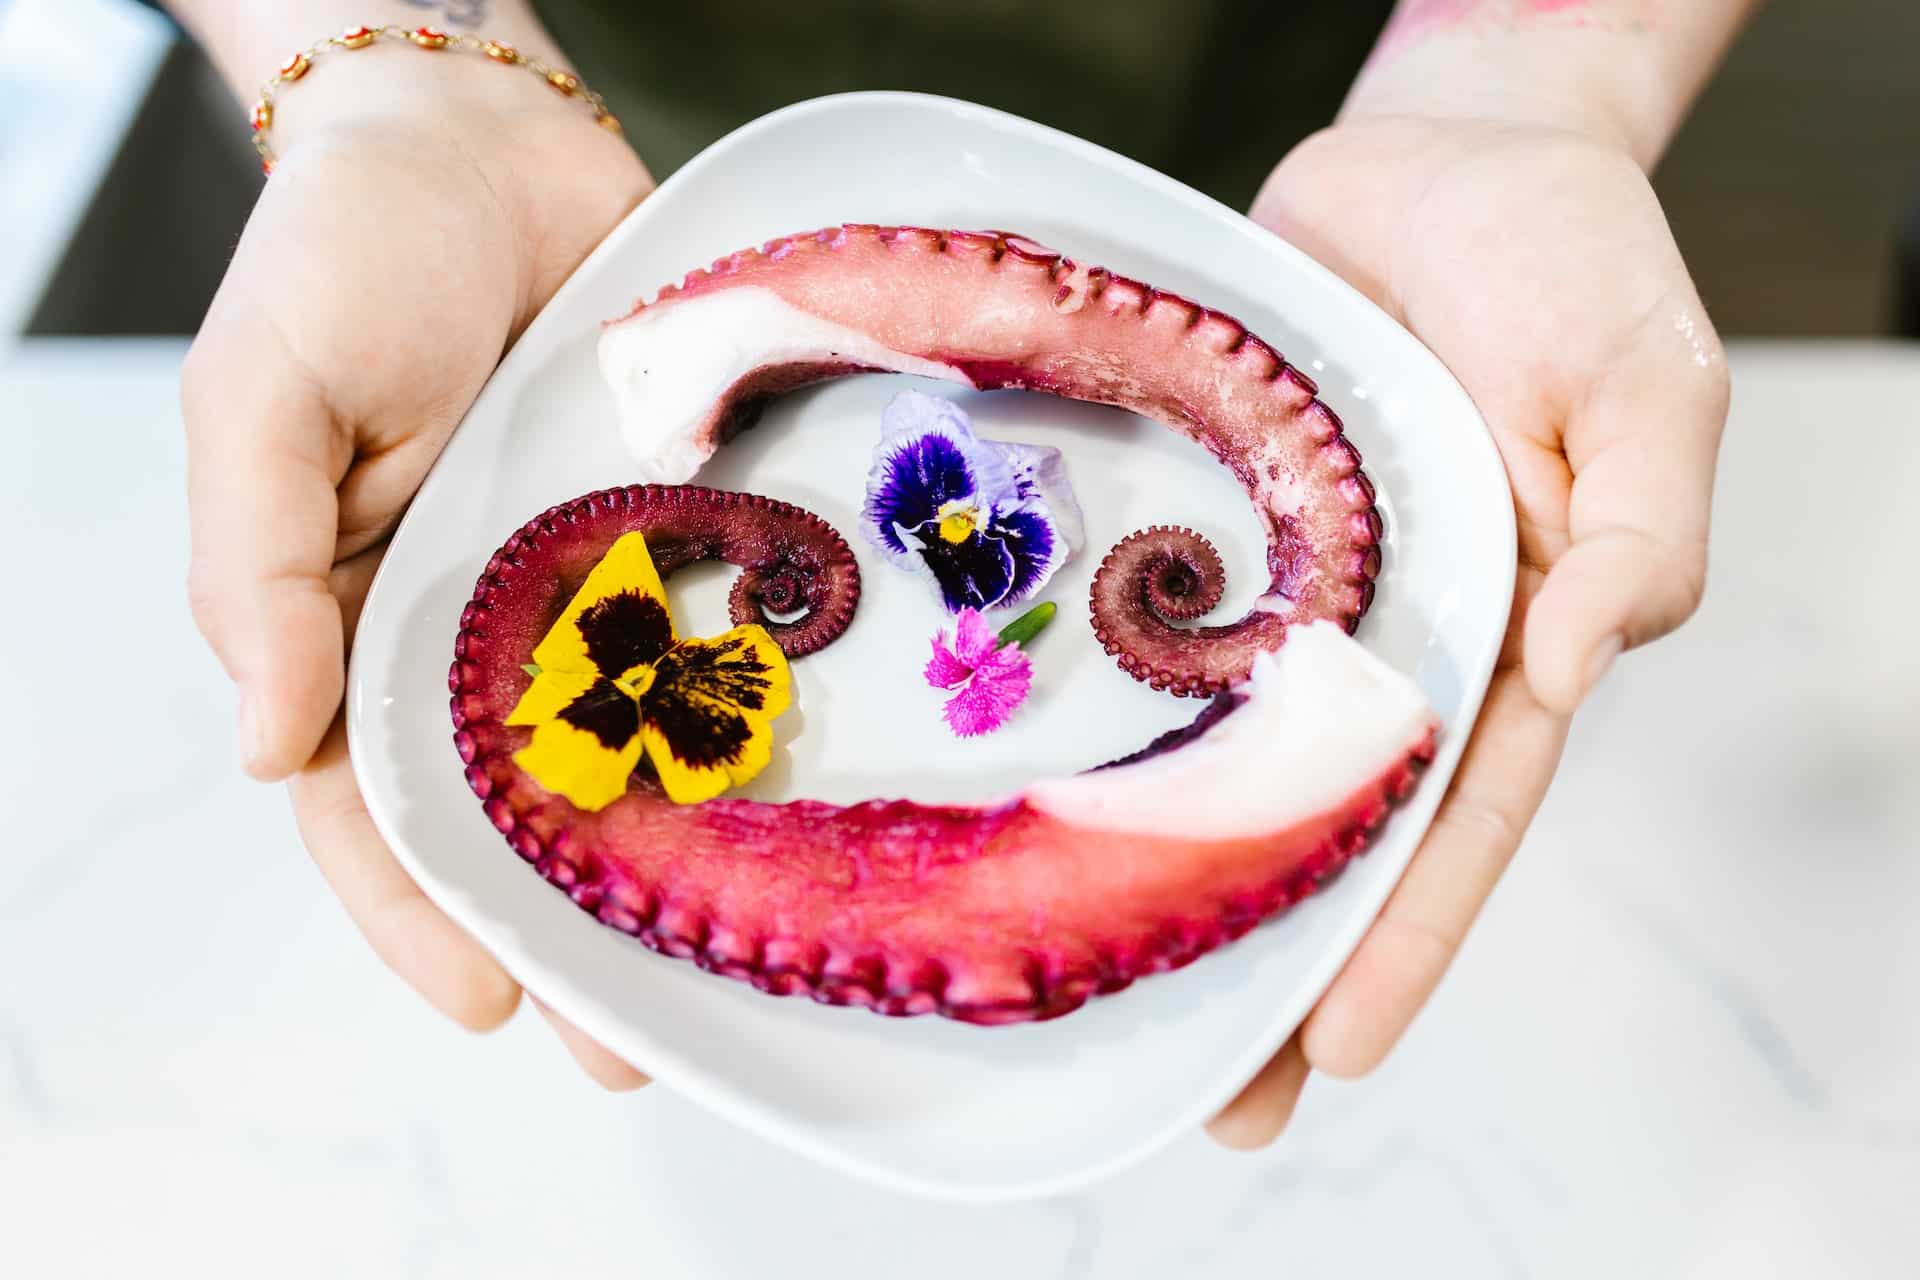 octopus tentacle in plate